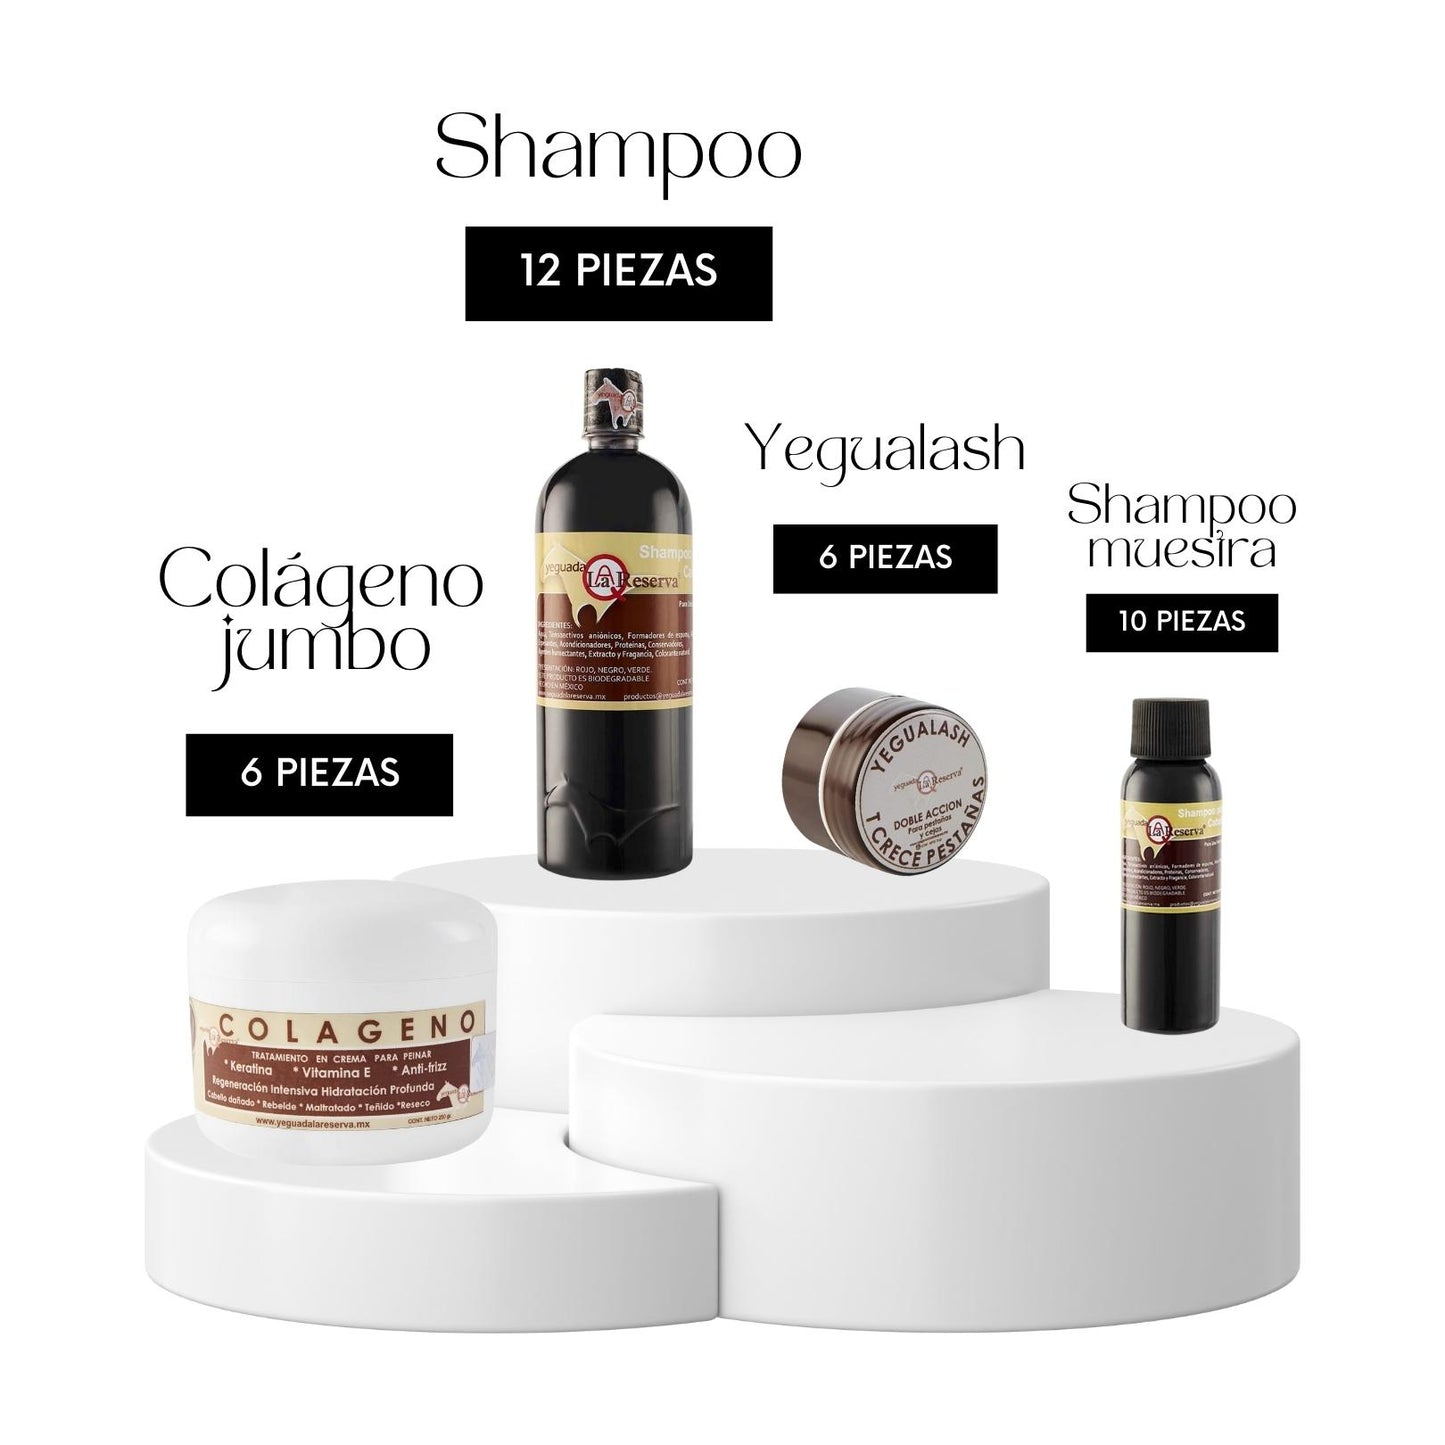 12 pz shampoo + 6 pz colágeno jumbo + 6 pz yegualash + 10 pz shampoo mini